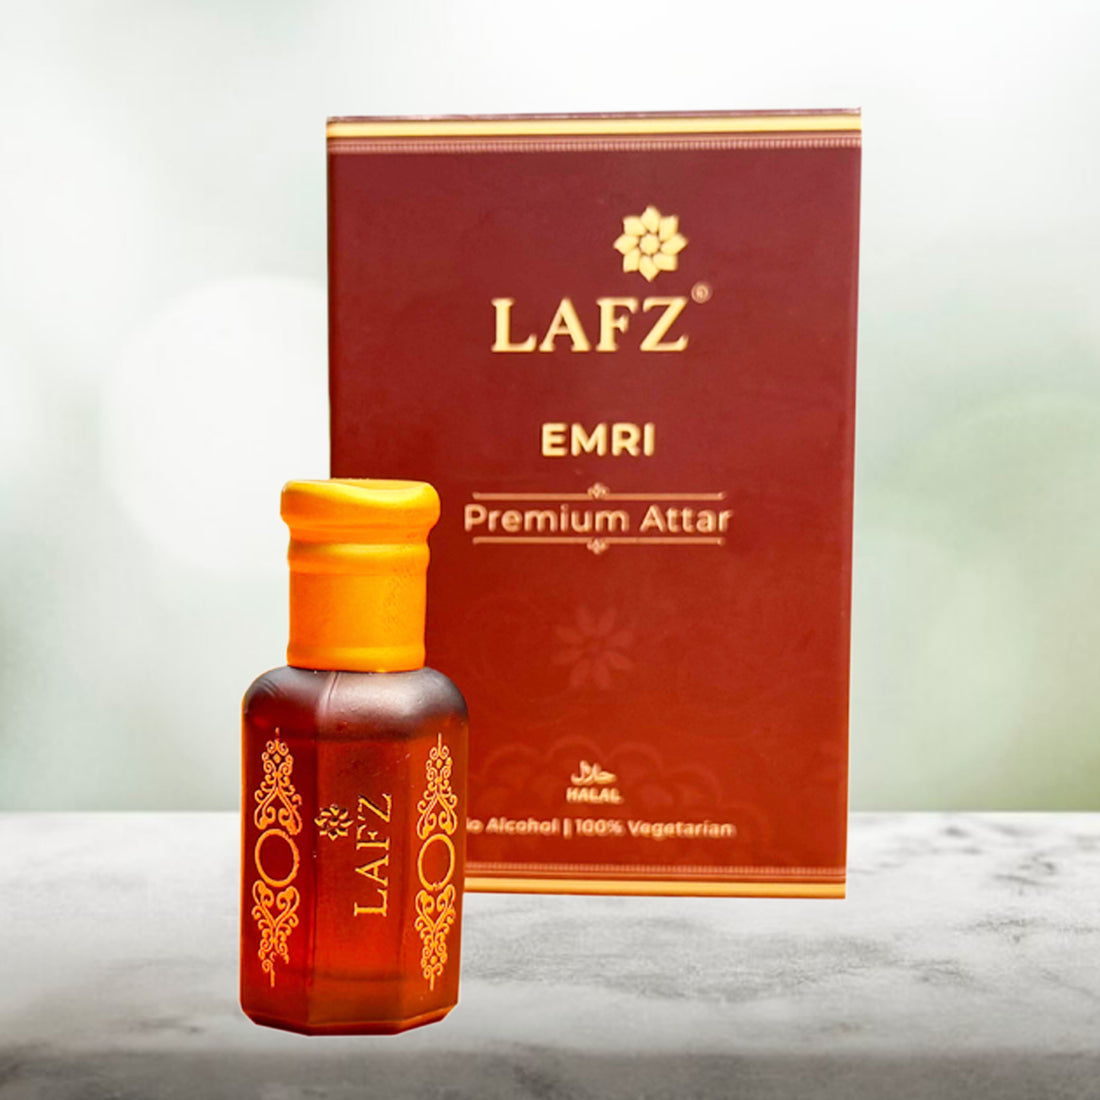 Lafz Premium Attar - Emre (10ml)